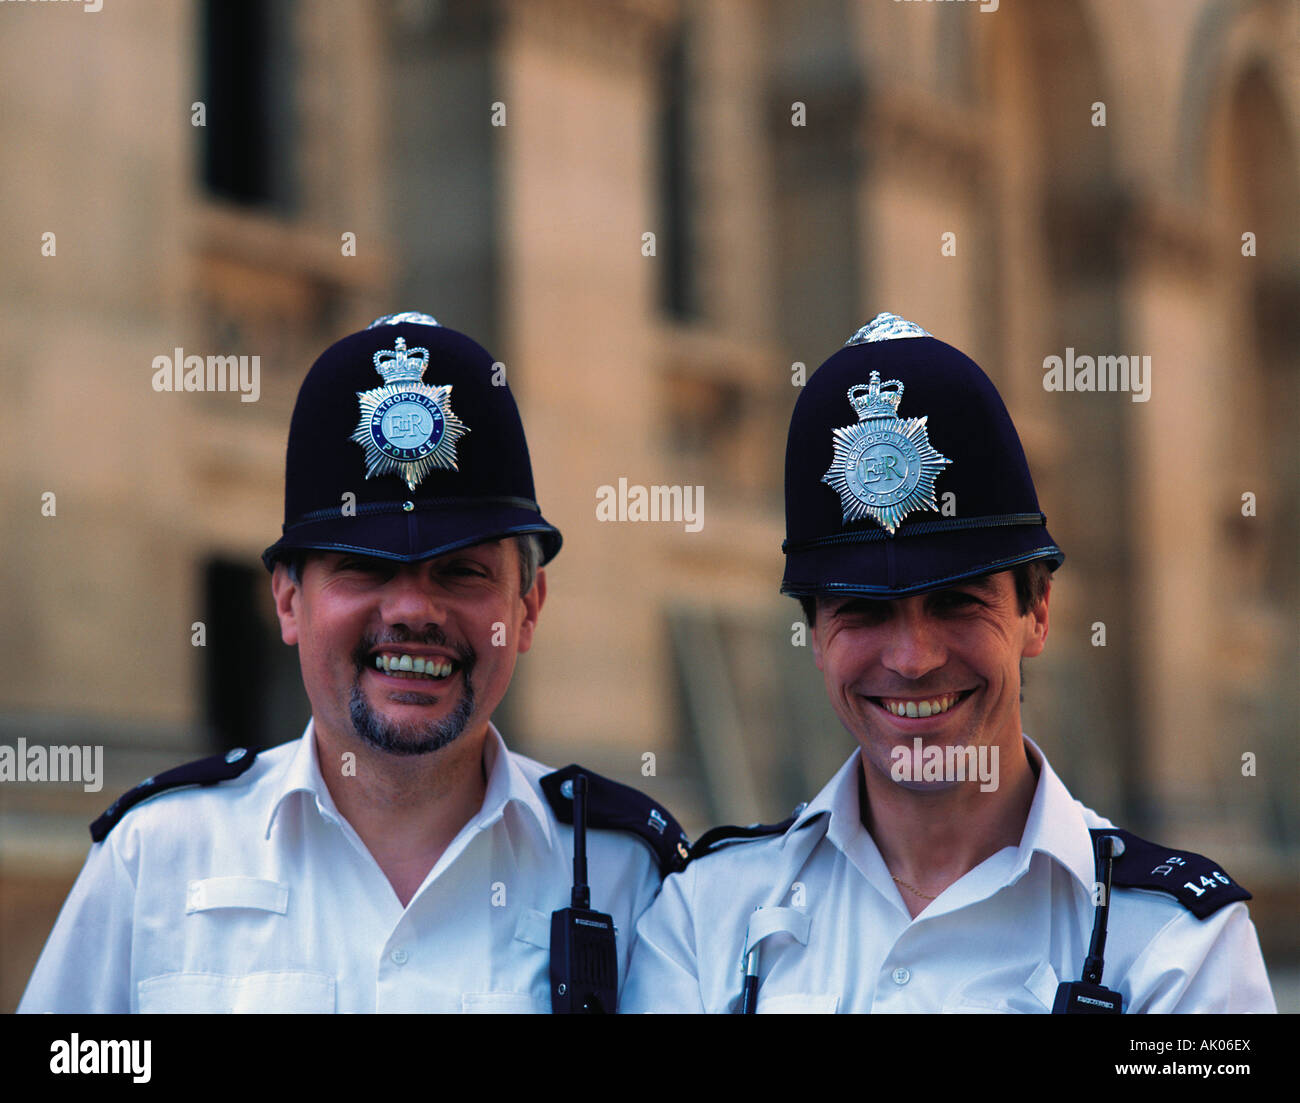 United Kingdom. L'Angleterre. Deux policiers britanniques. Banque D'Images